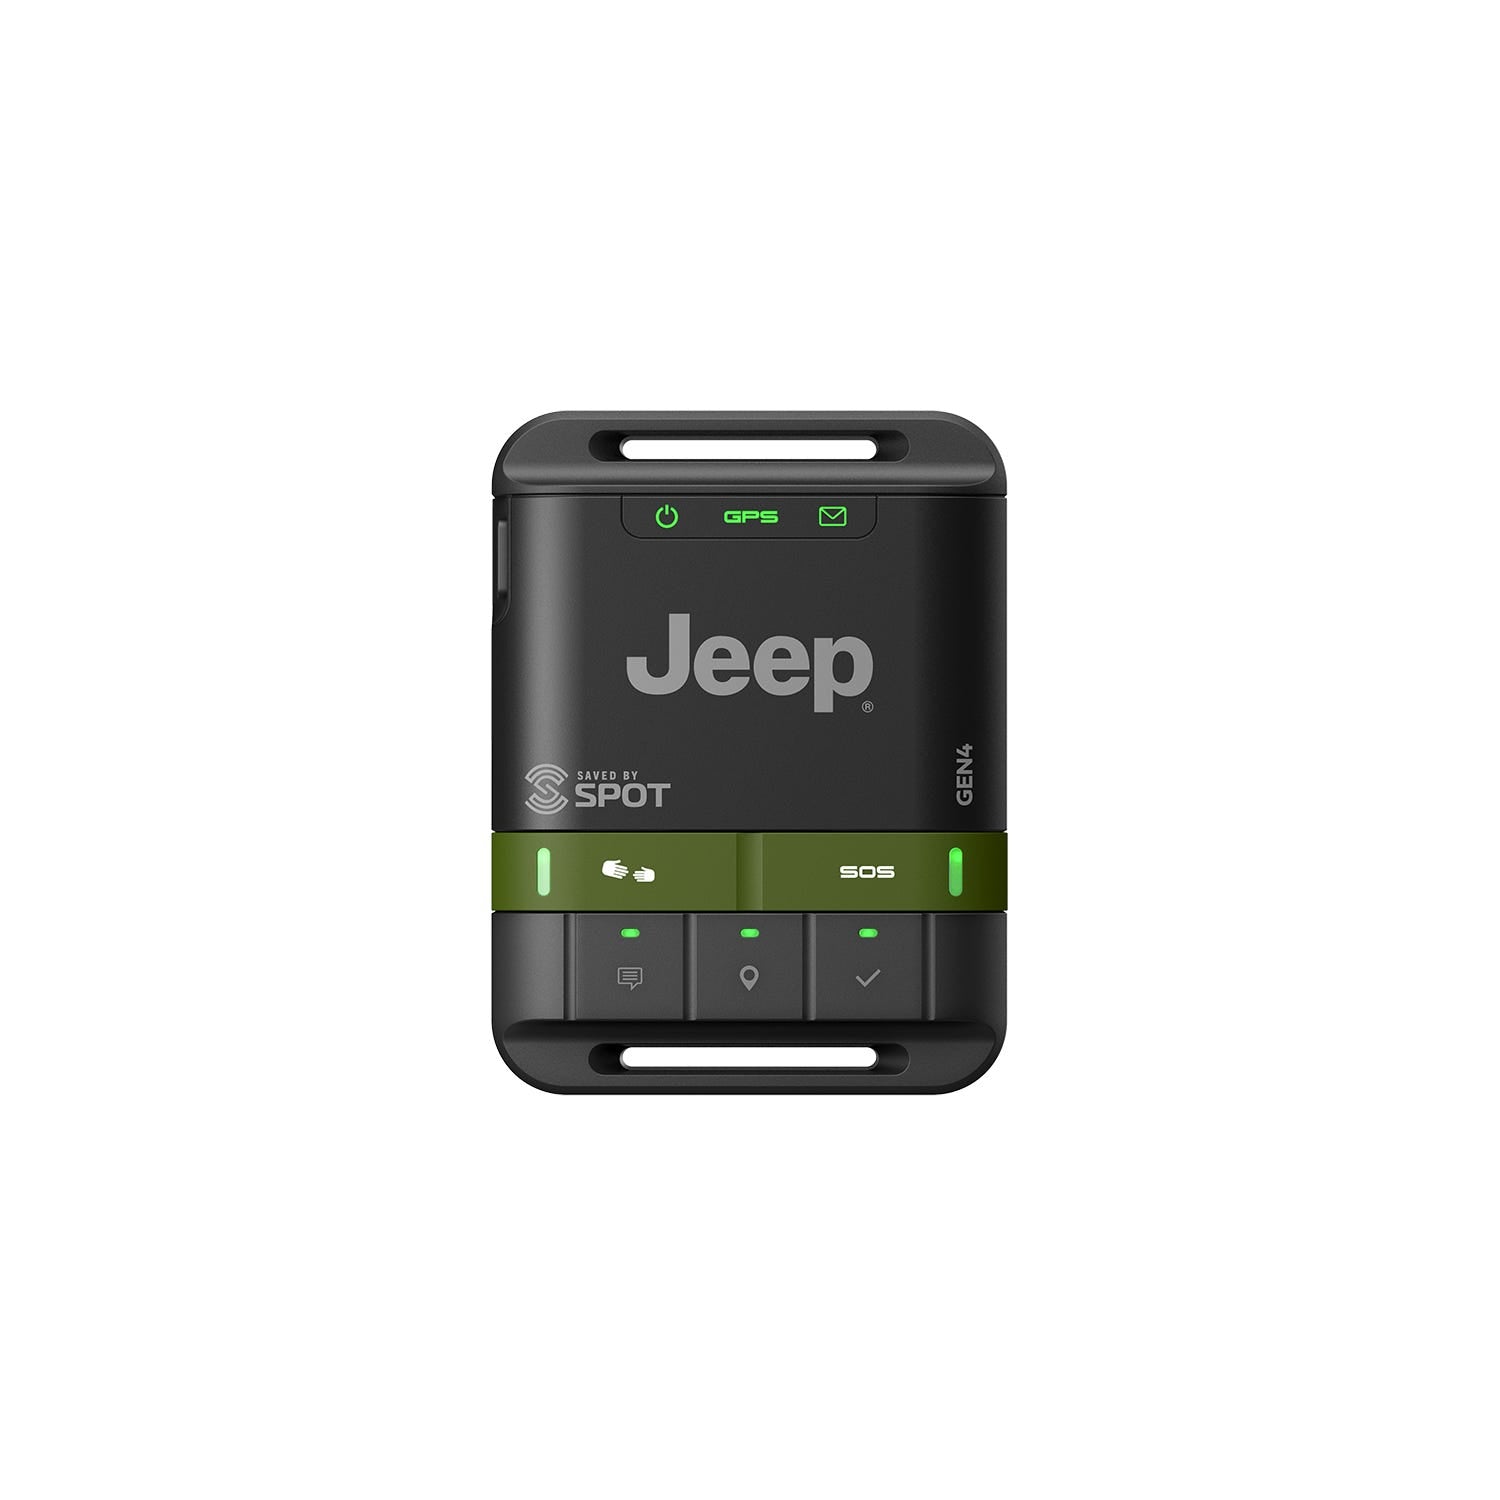 Spot Gen 4 Jeep Edition